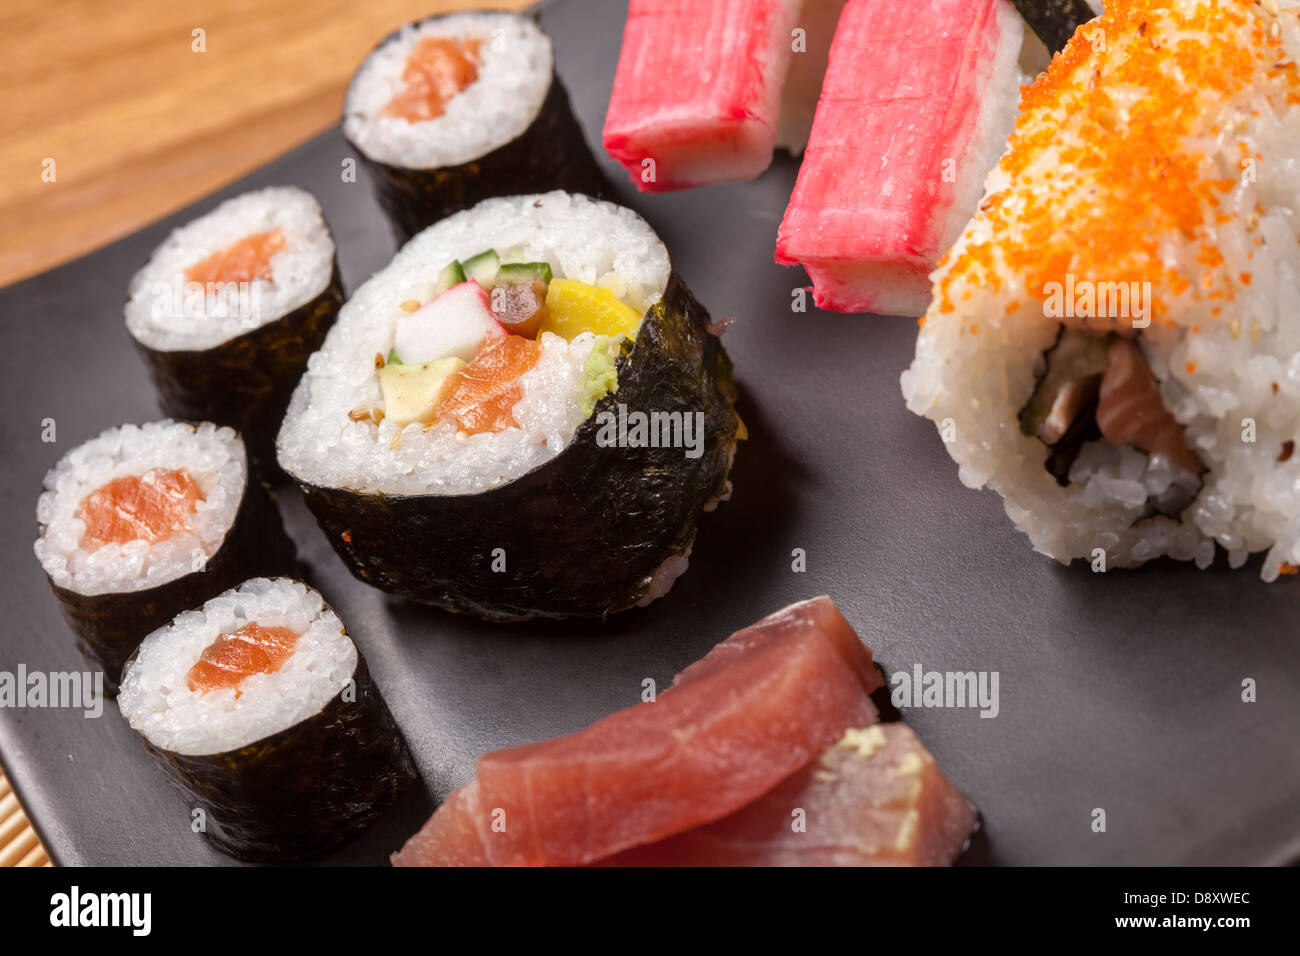 Variation of fresh tasty sushi food Stock Photo